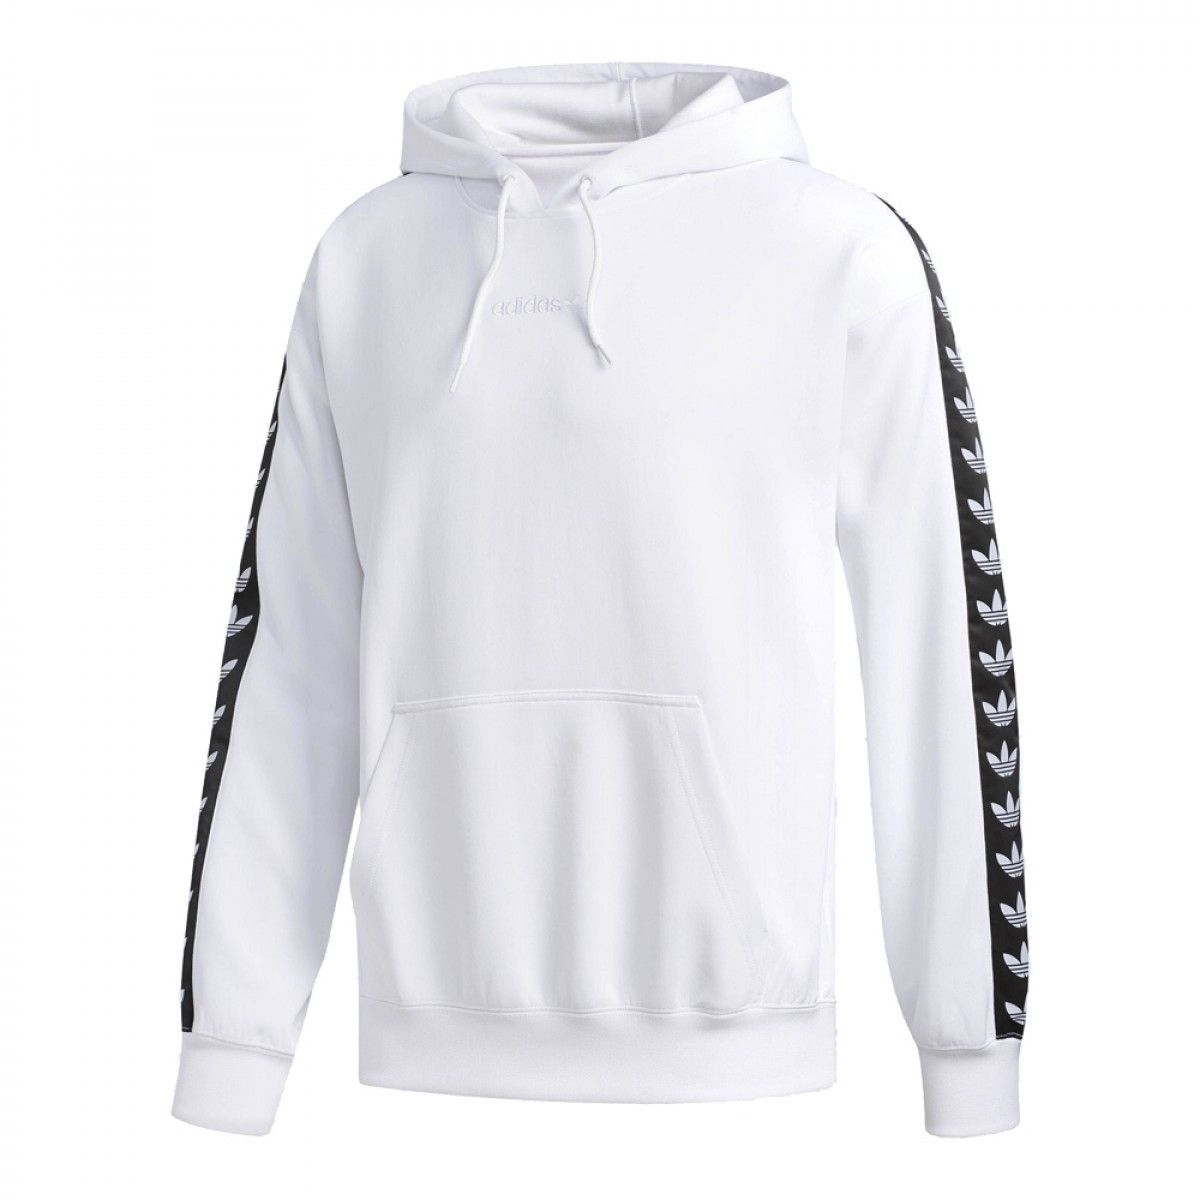 Adidas Adidas Originals TNT Tape pullover hoodie Size US M / EU 48-50 / 2 - 1 Preview